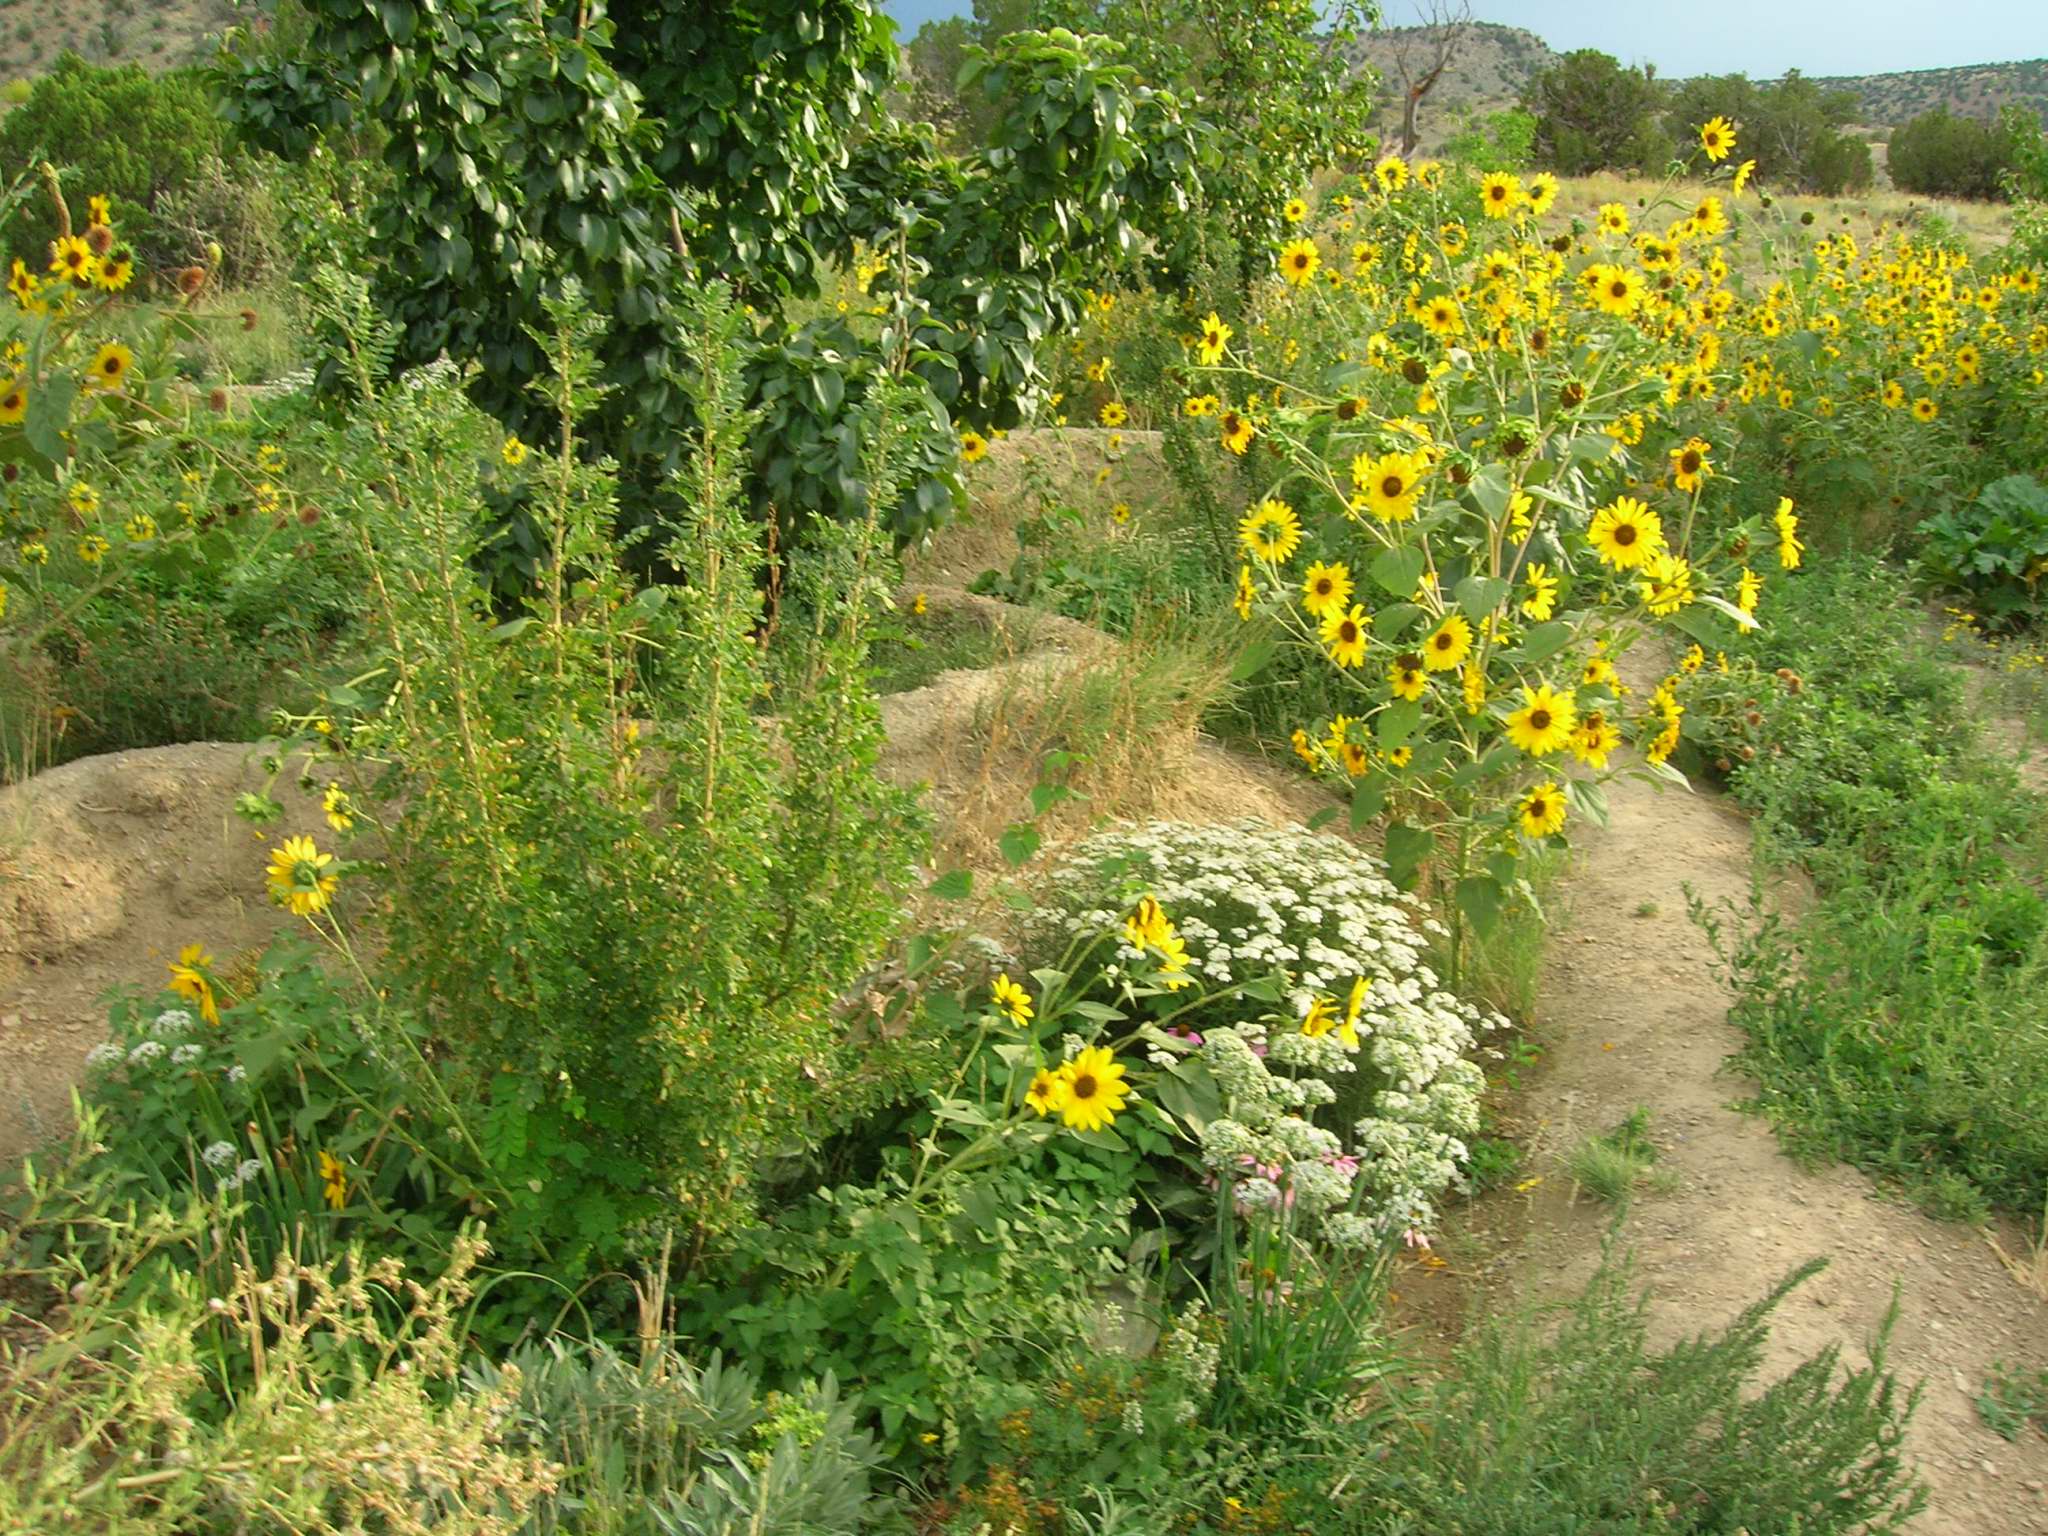 The Garden in 2005